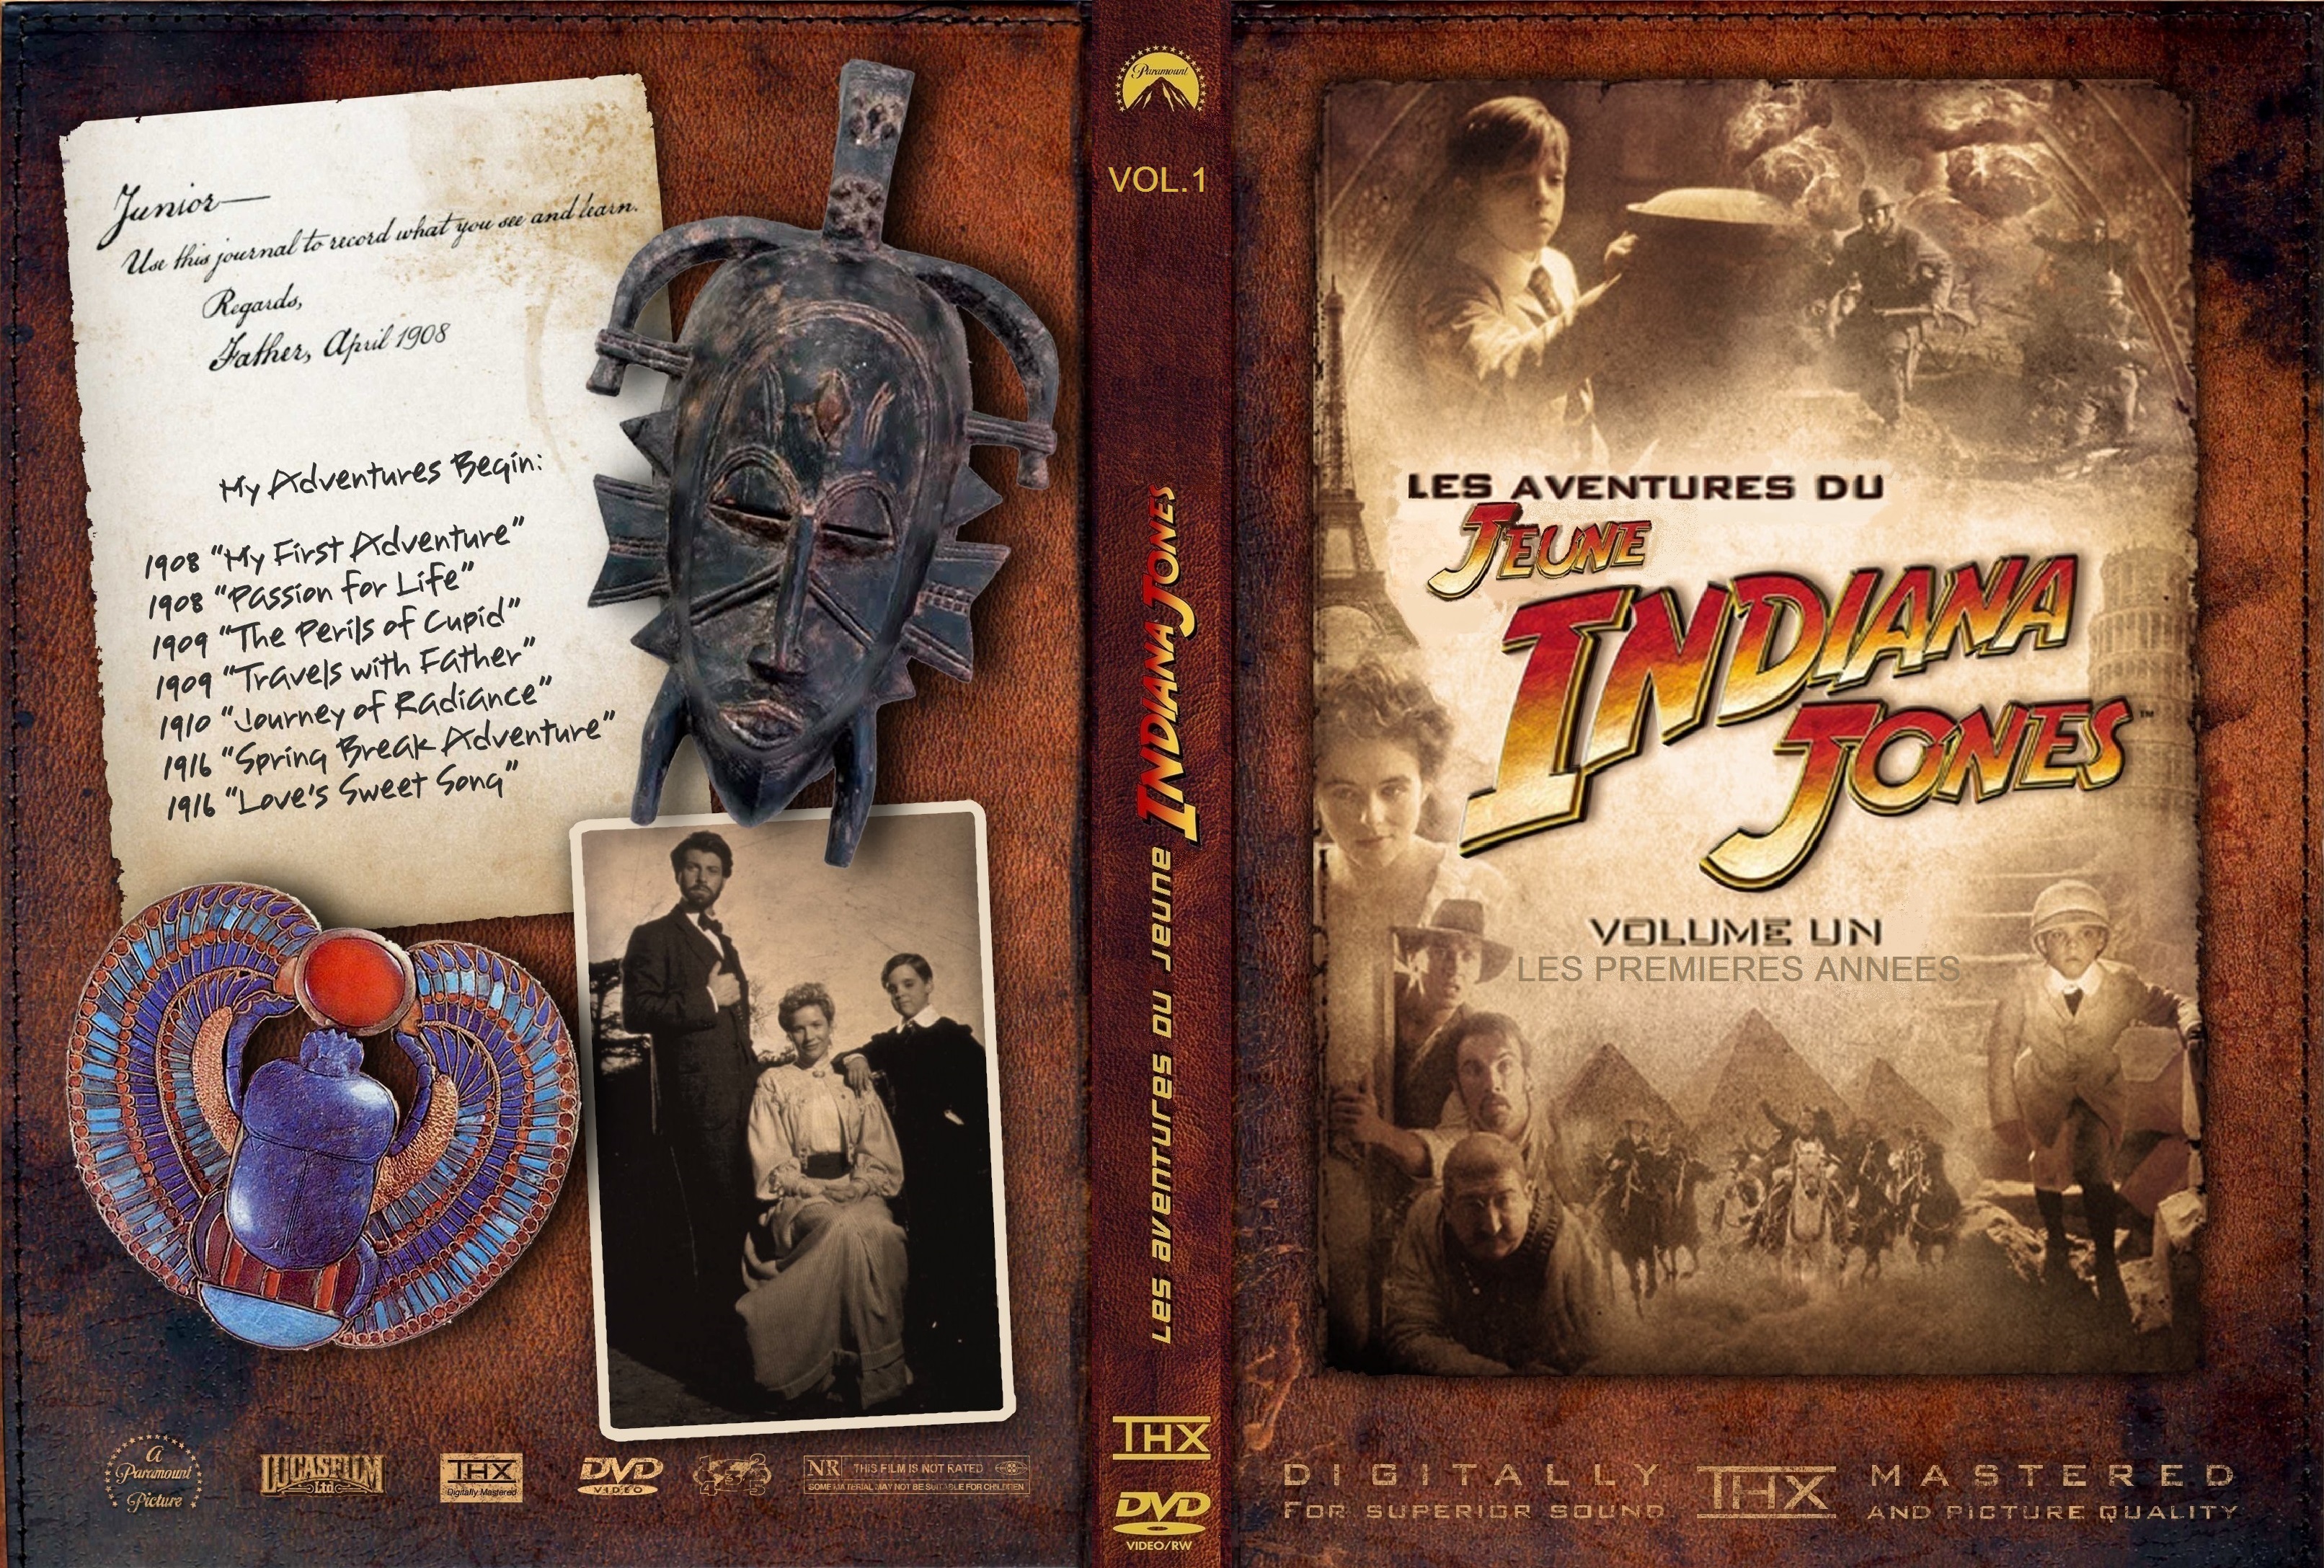 Jaquette DVD Les aventures du jeune Indiana Jones vol 1 custom